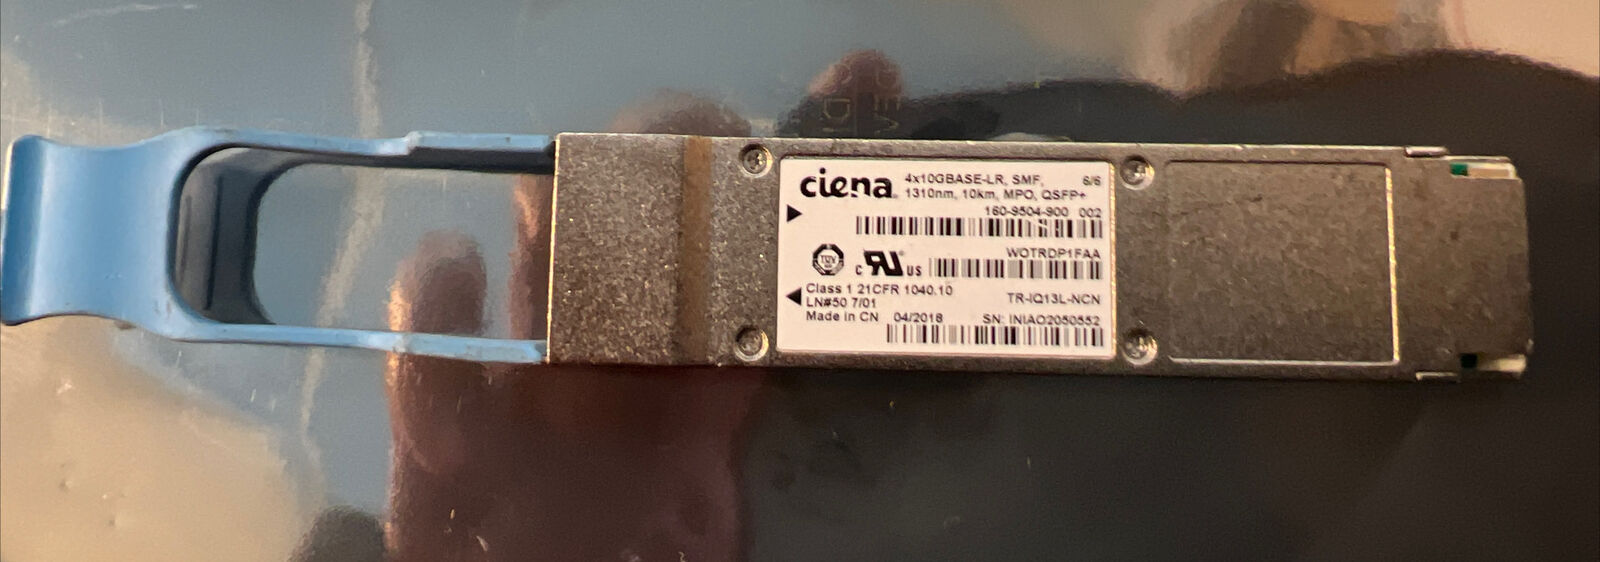 Ciena 160-9504-900 002  QSFP+, 4x10GBASE-LR, SMF, 1310nm, 10km, MPO WOTRDP1FAA